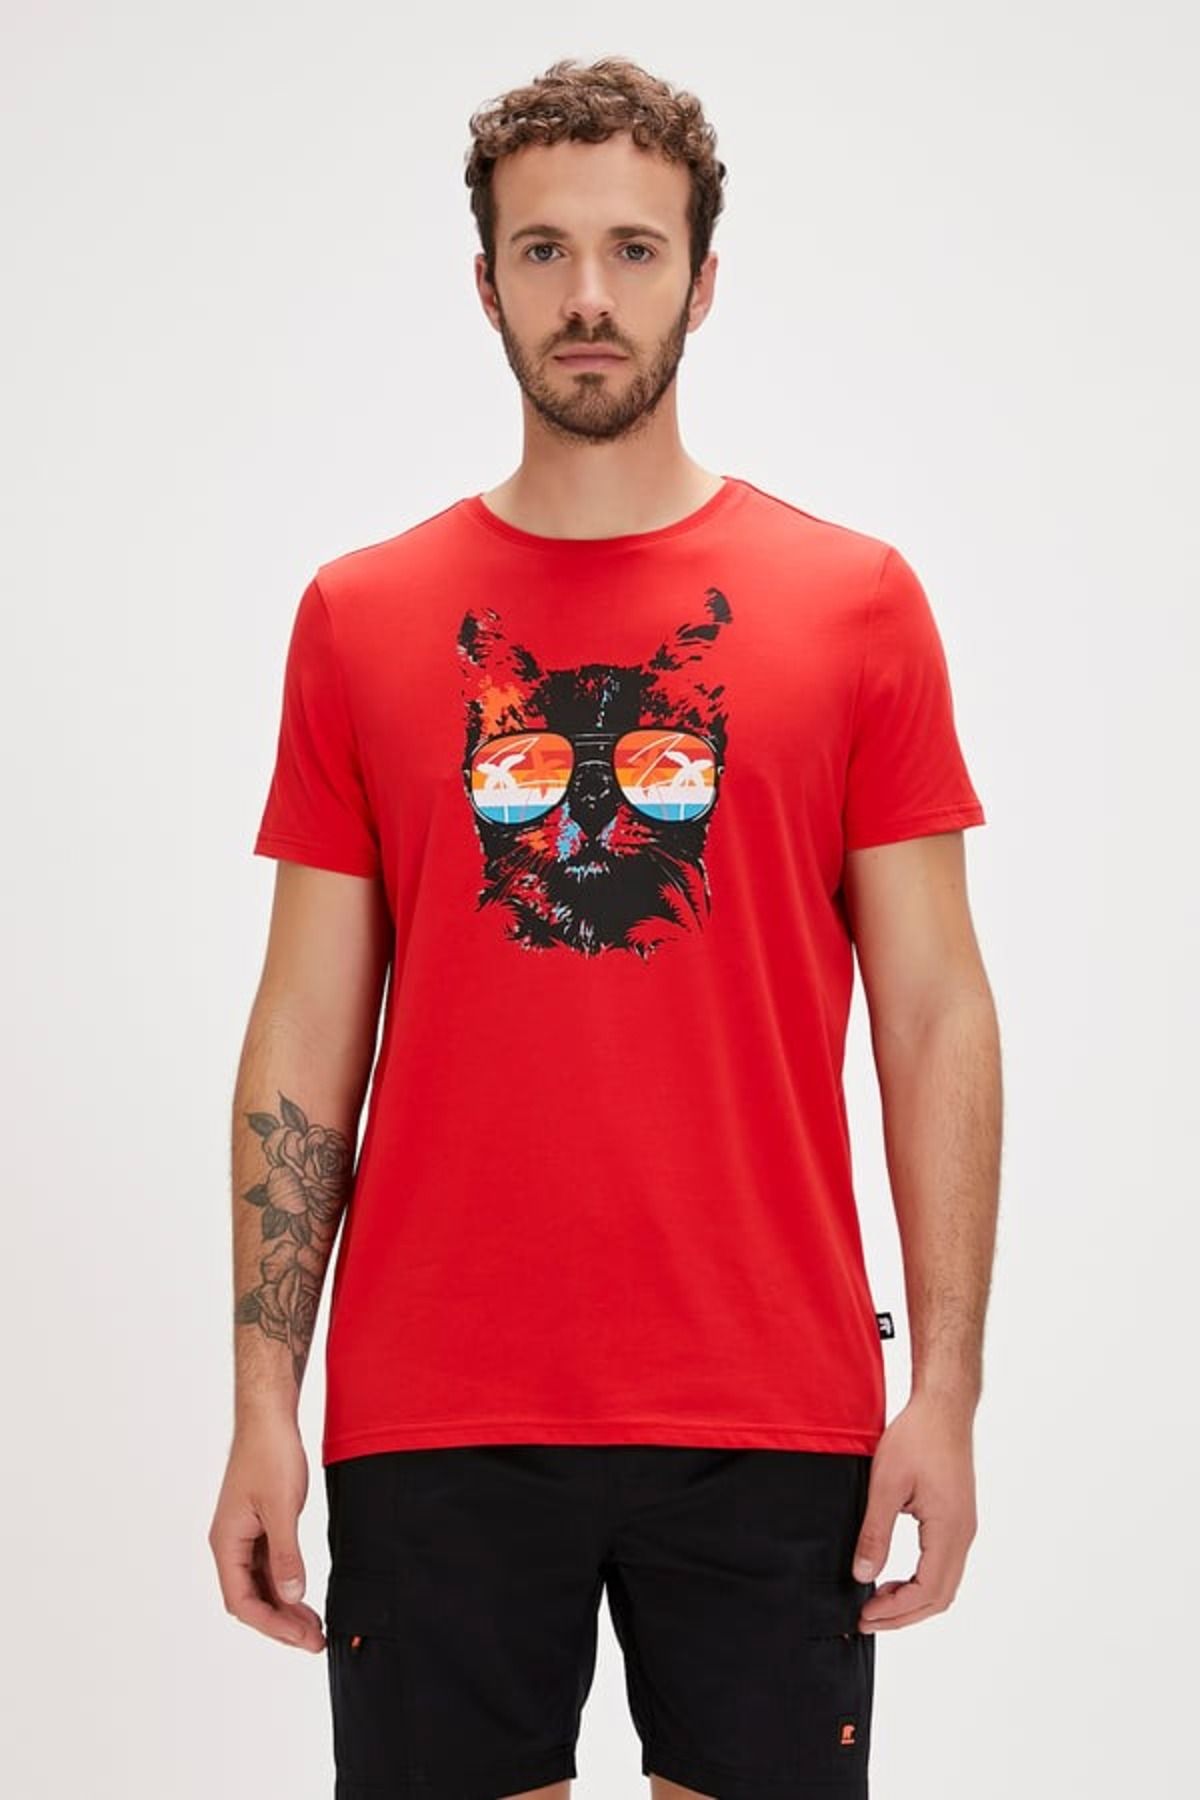 Bad Bear Manx Erkek T-shirt 24.01.07.011 Crımson Red